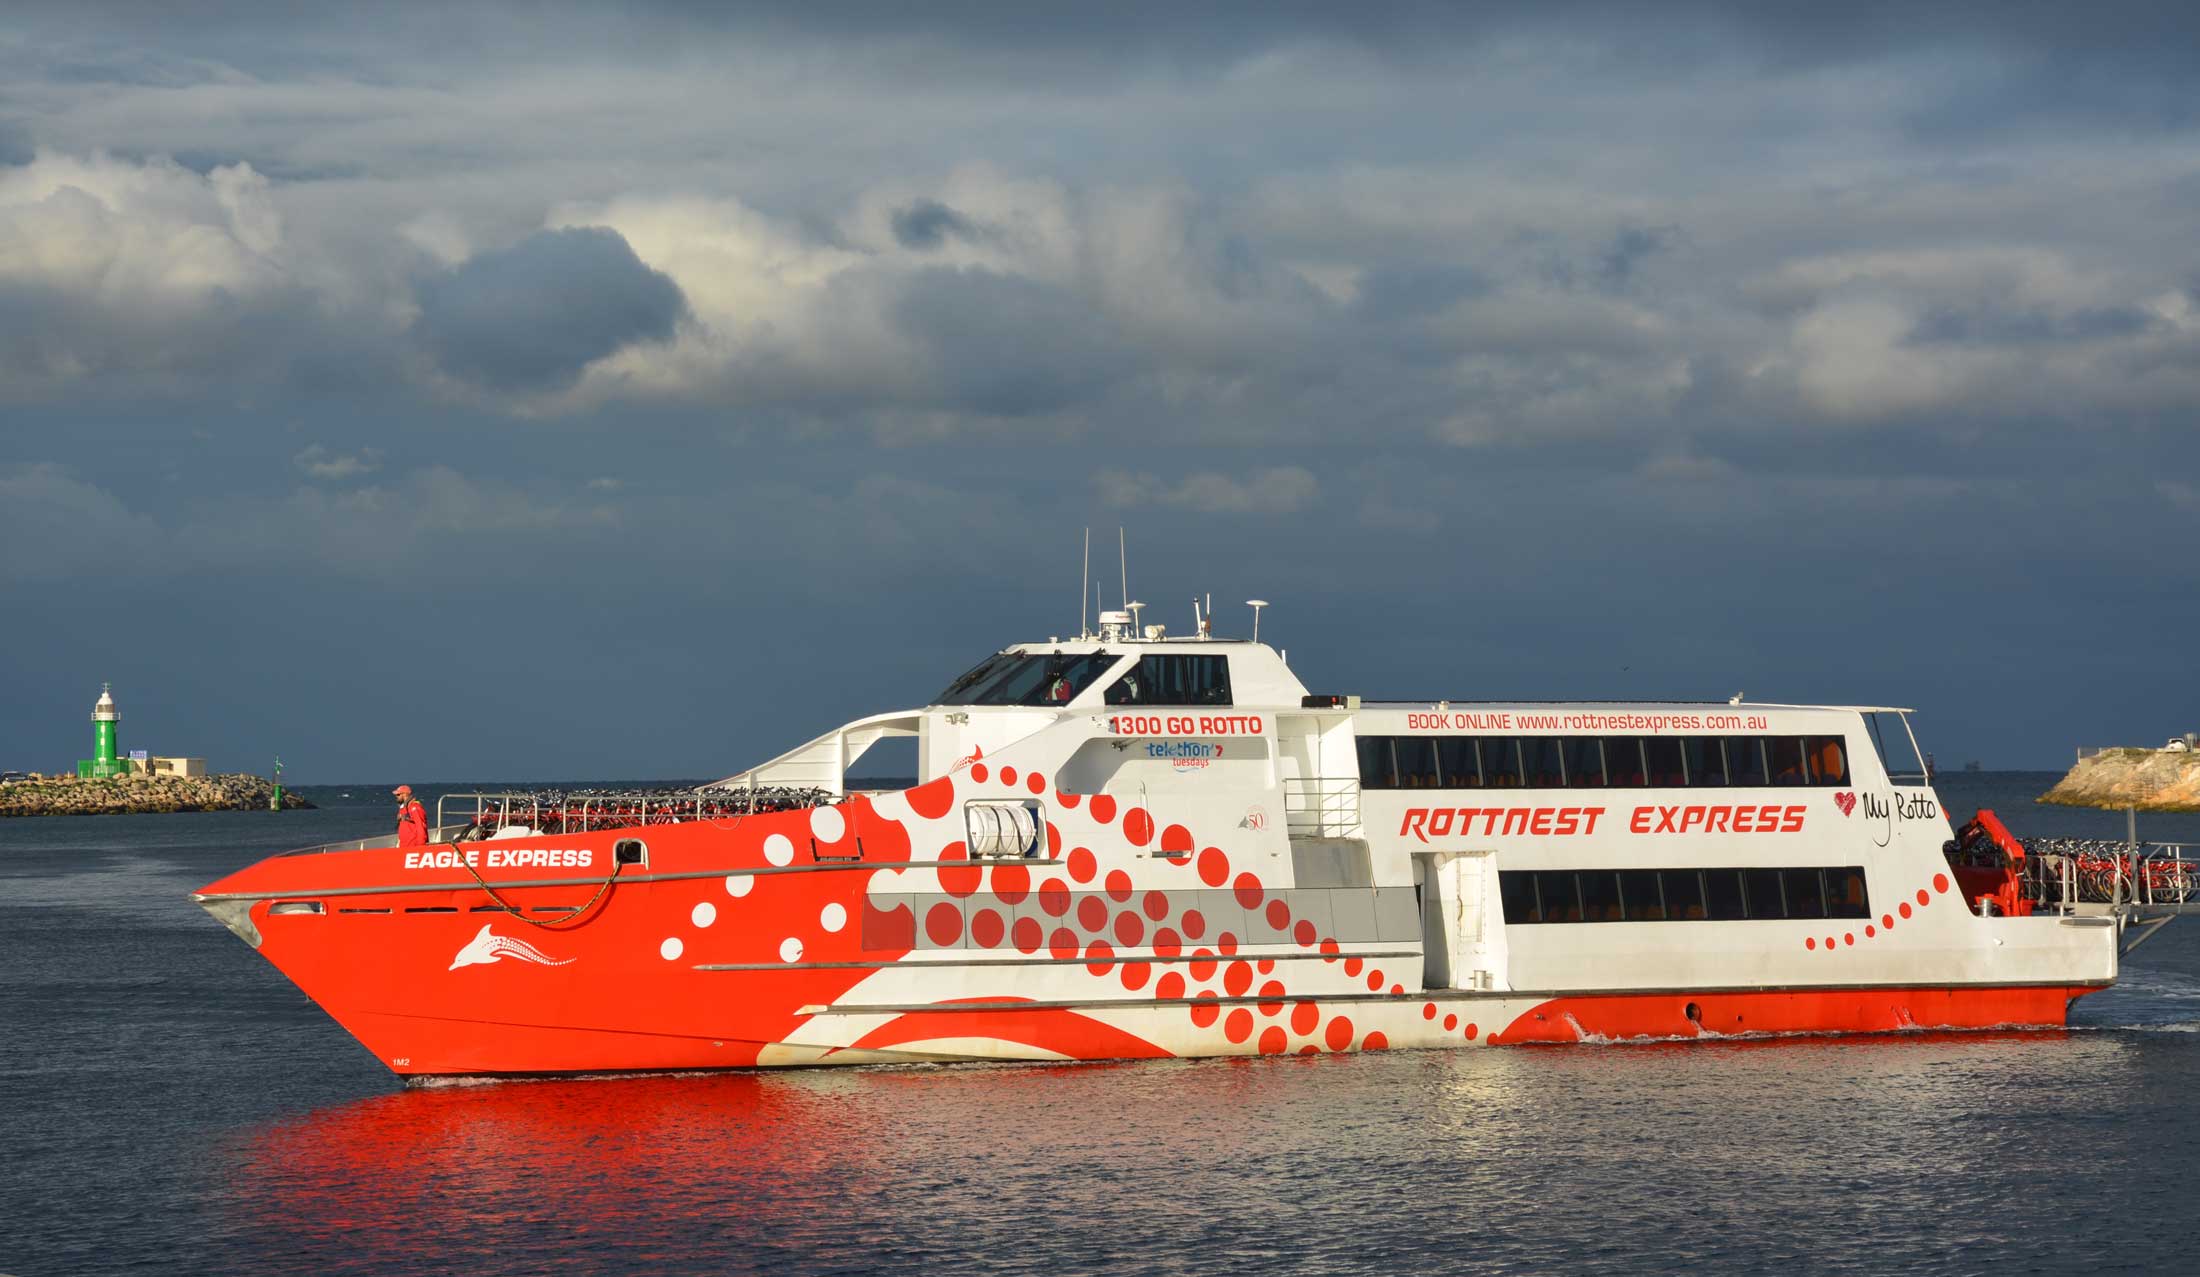 Rottnest express - Ships in Fremantle Port - Fremantle Shipping News